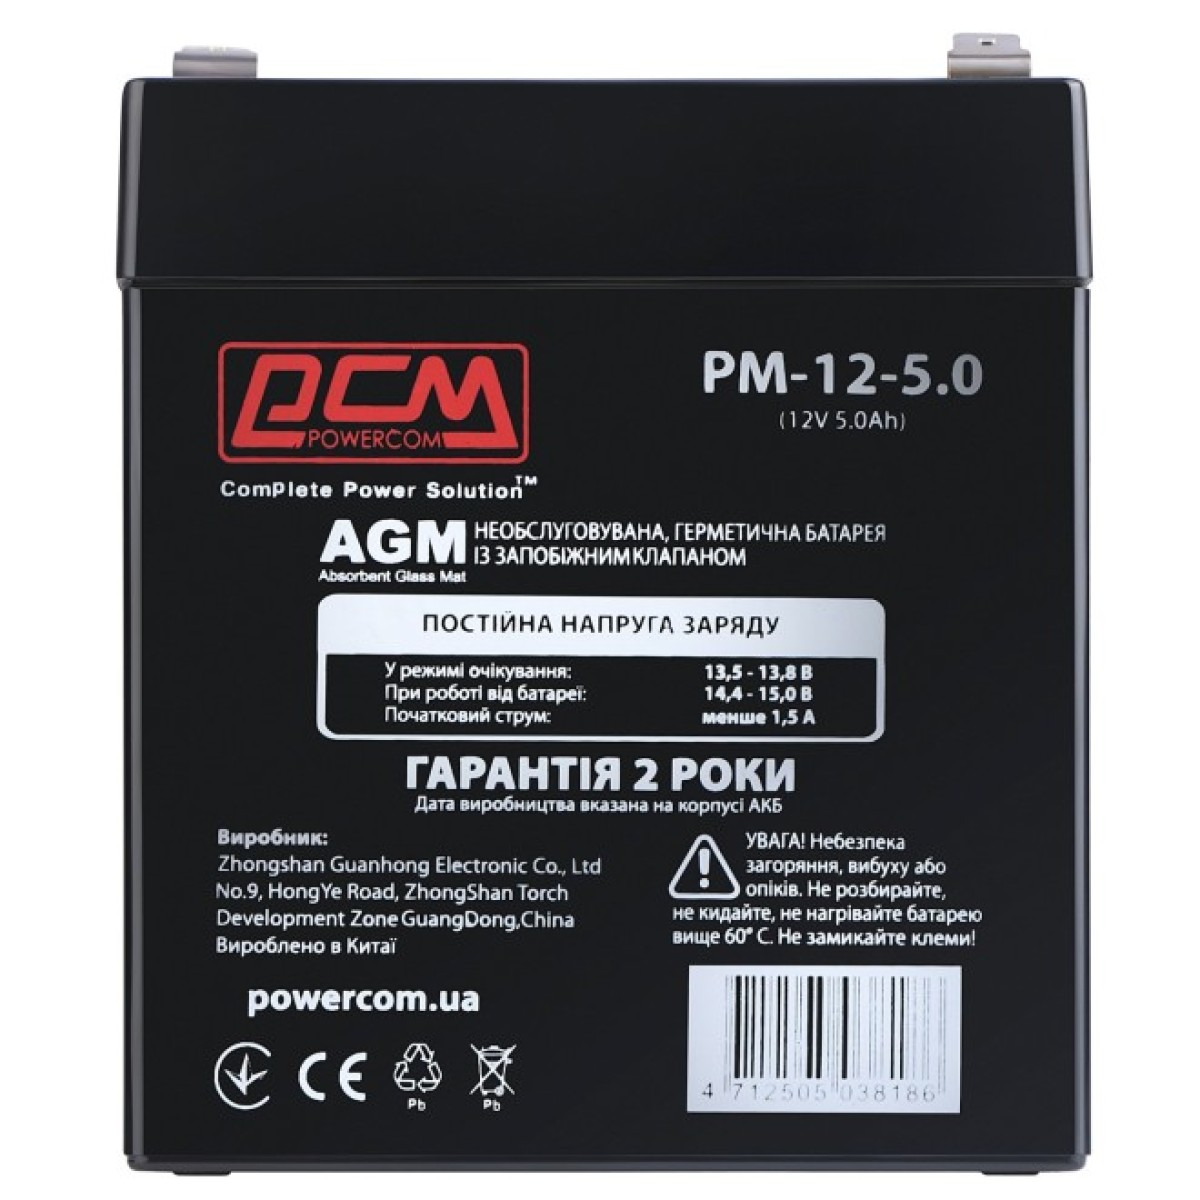 Батарея к ИБП Powercom PM-12-5.0, 12V 5Ah (PM-12-5.0) 256_256.jpg